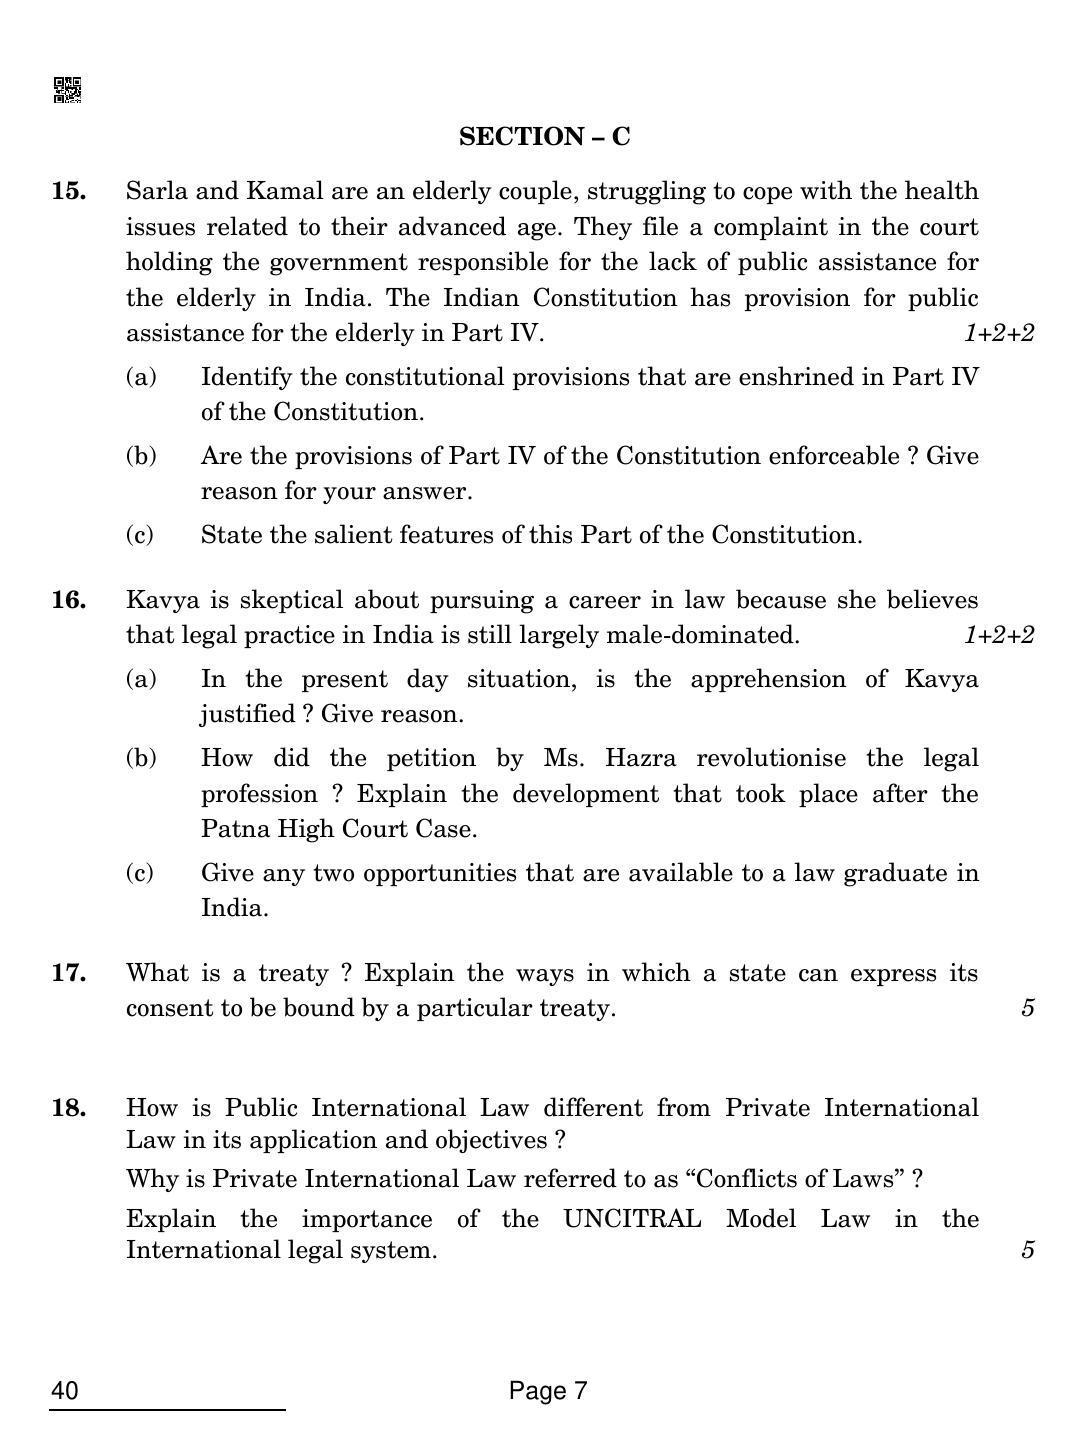 CBSE Class 12 40 LEGAL STUDIES 2022 Compartment Question Paper - Page 7